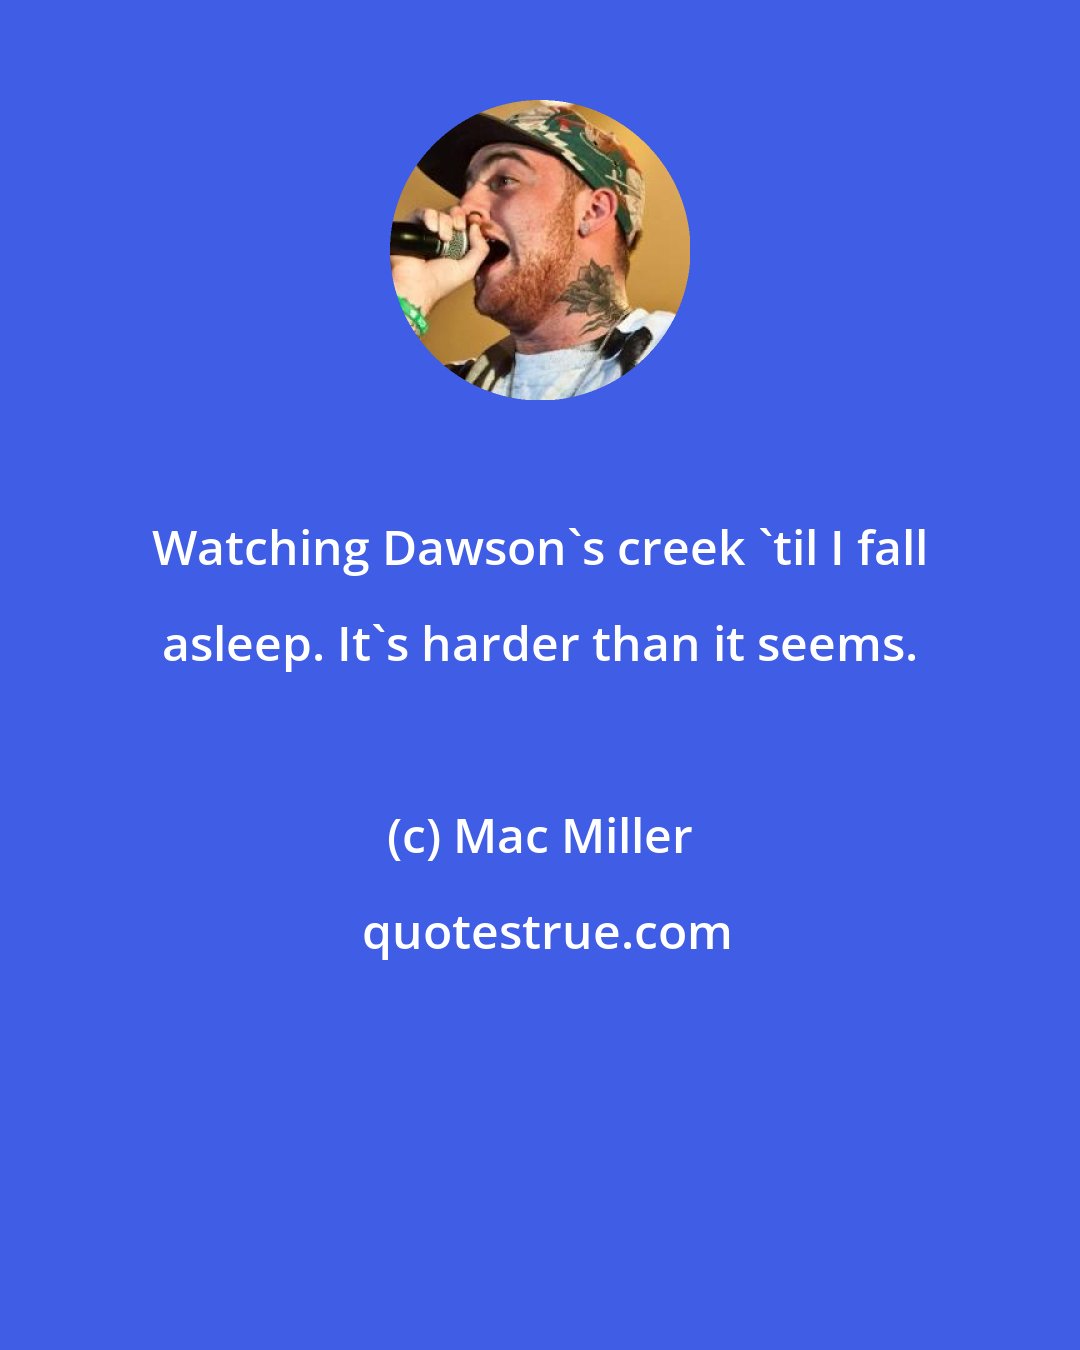 Mac Miller: Watching Dawson's creek 'til I fall asleep. It's harder than it seems.